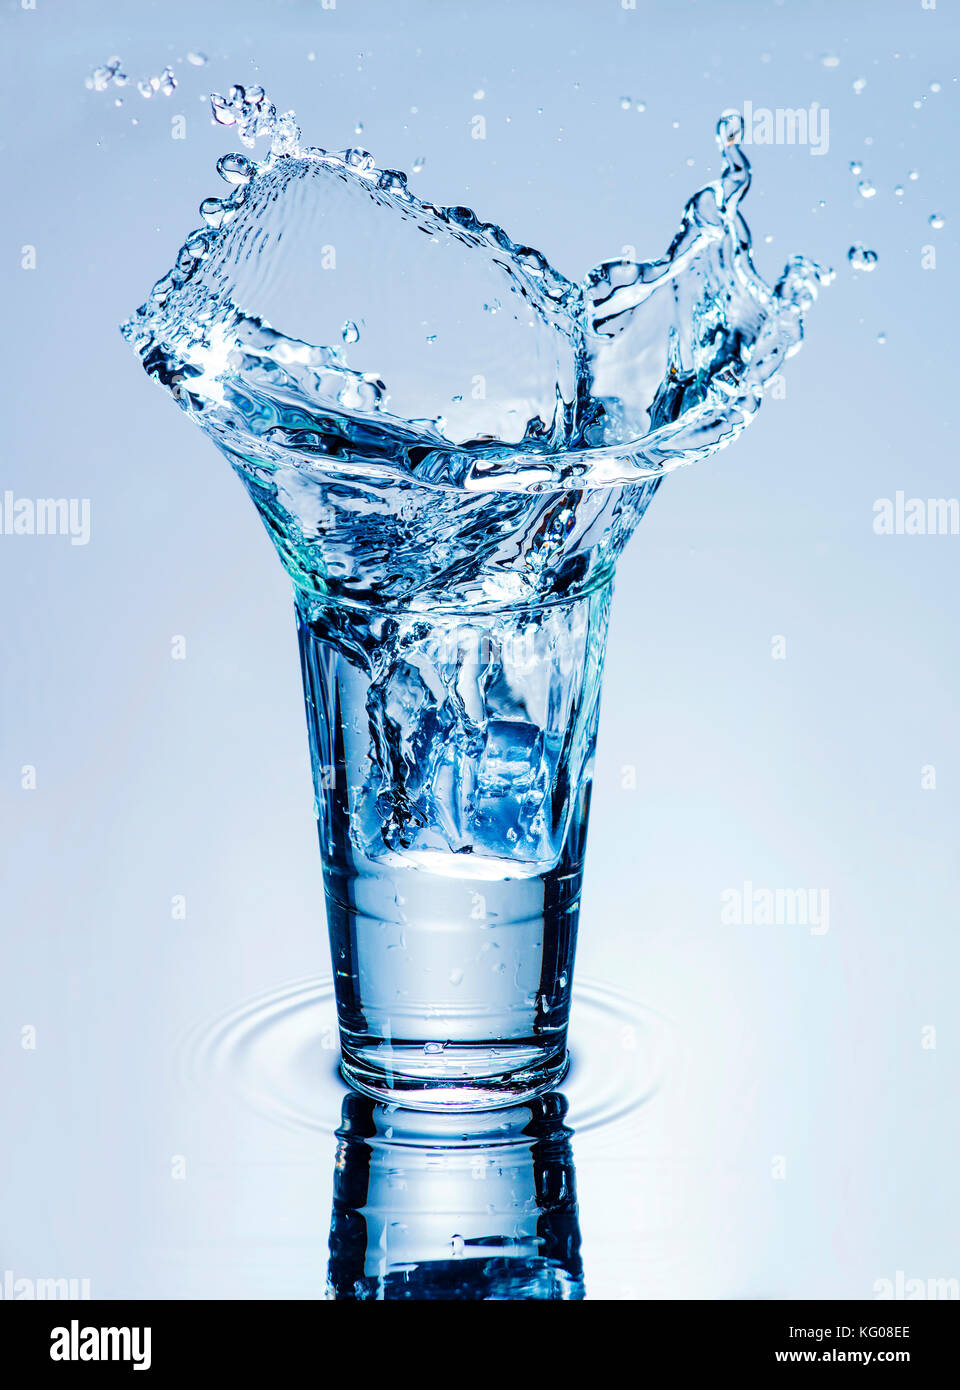 Icecube schizzi in un bicchiere d'acqua Foto stock - Alamy